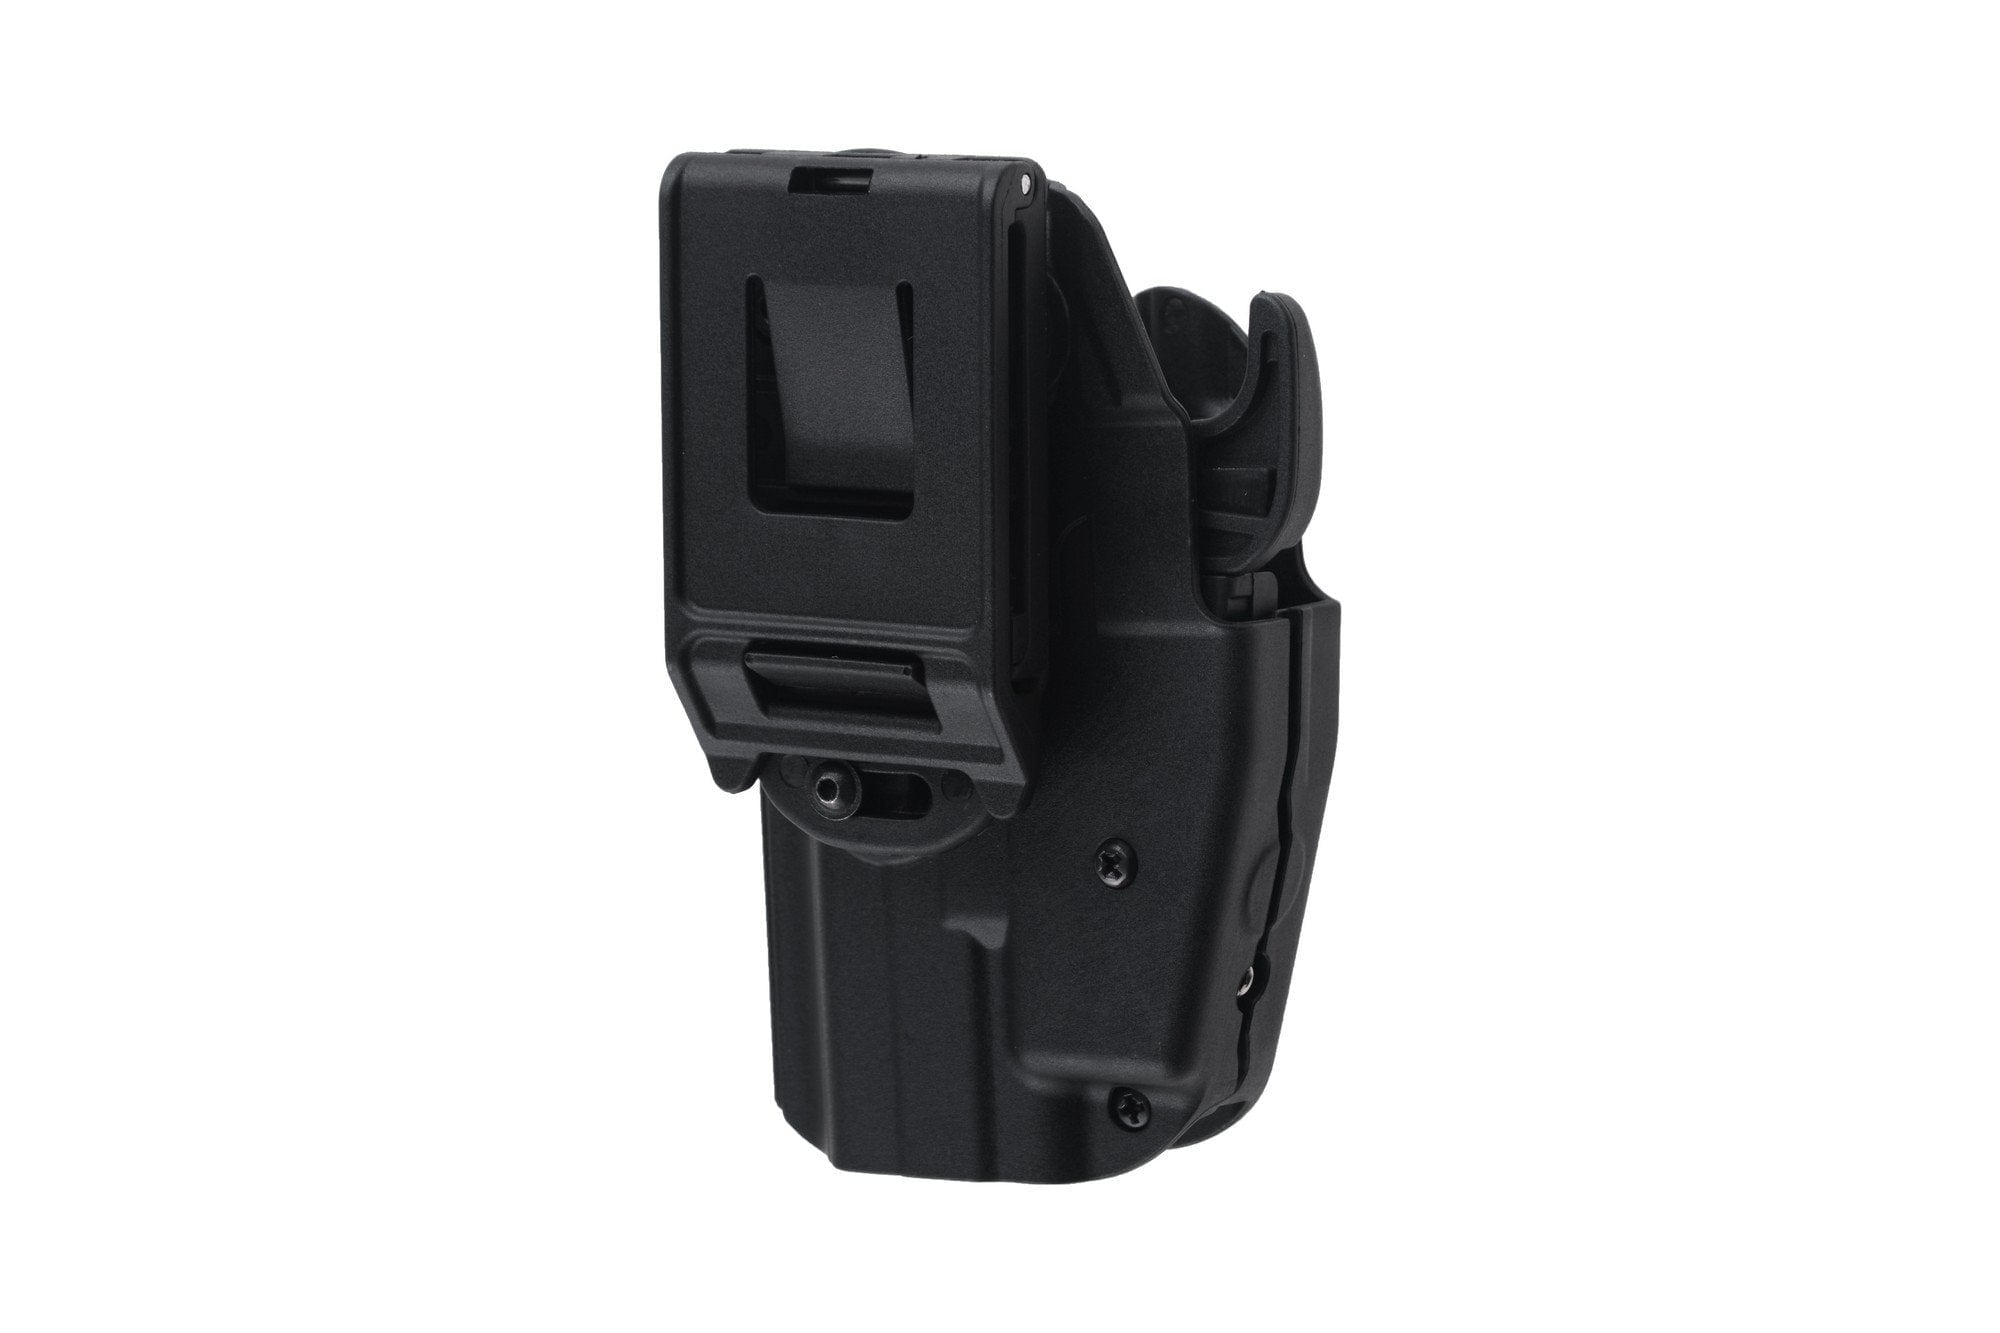 Compact II universal holster - black